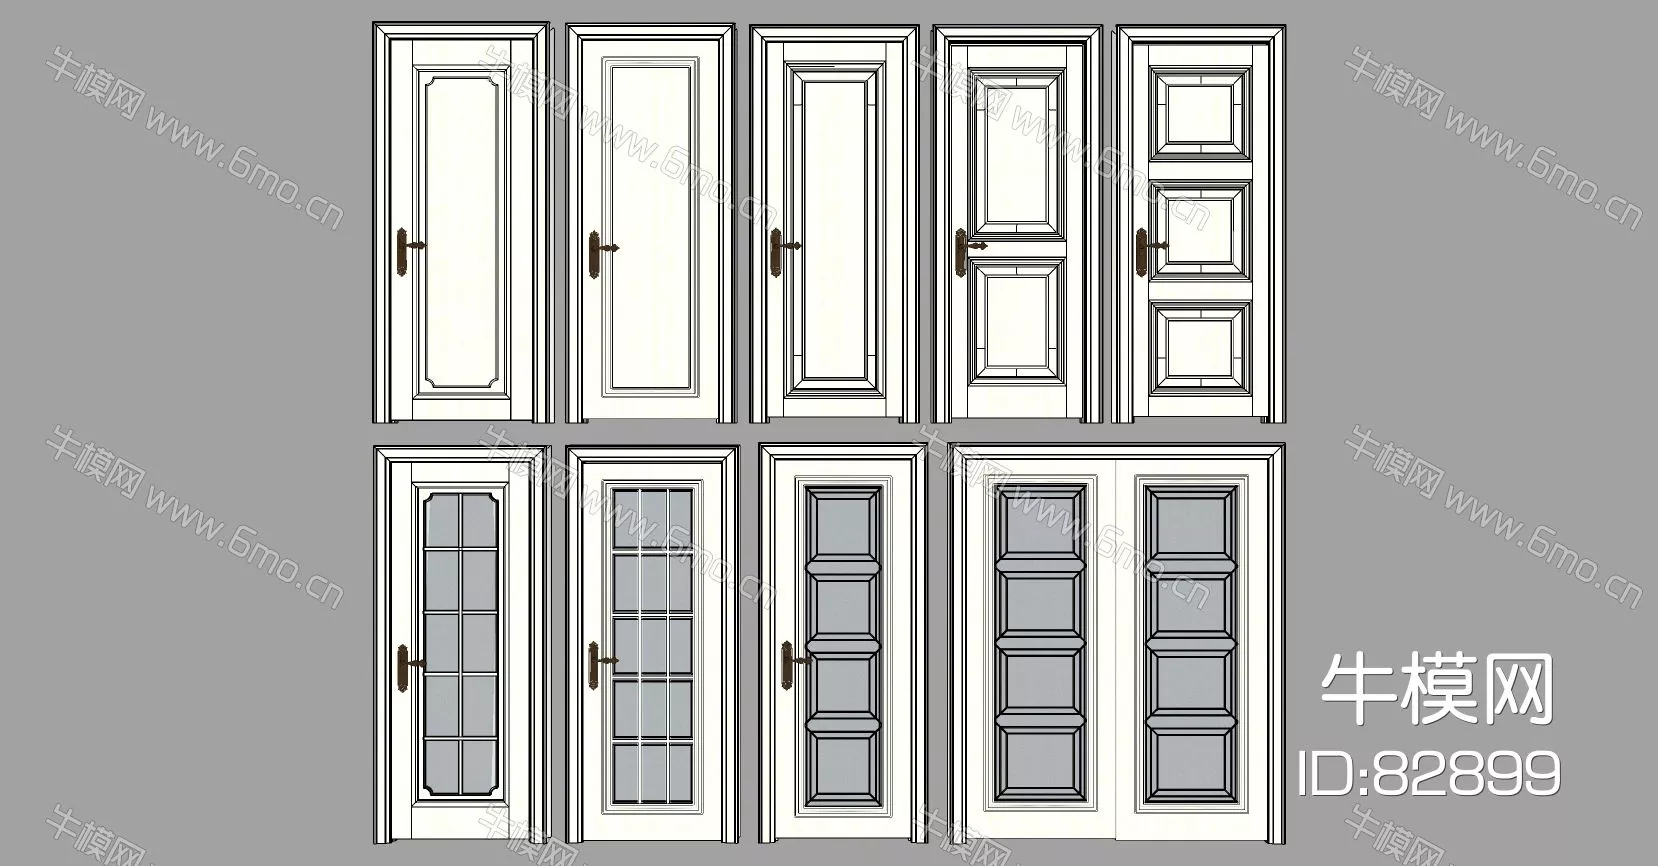 MODERN DOOR AND WINDOWS - SKETCHUP 3D MODEL - ENSCAPE - 82899